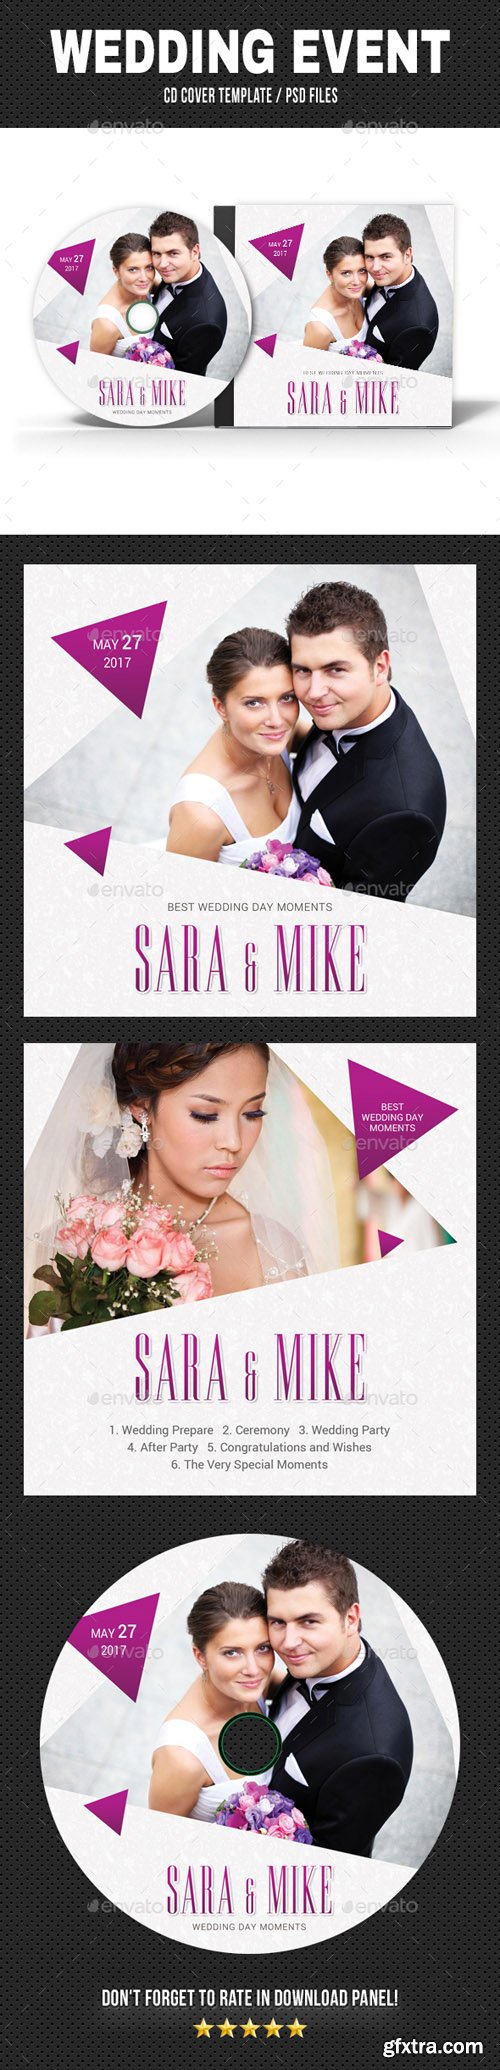 GR - Wedding Event CD Cover v19 20351621